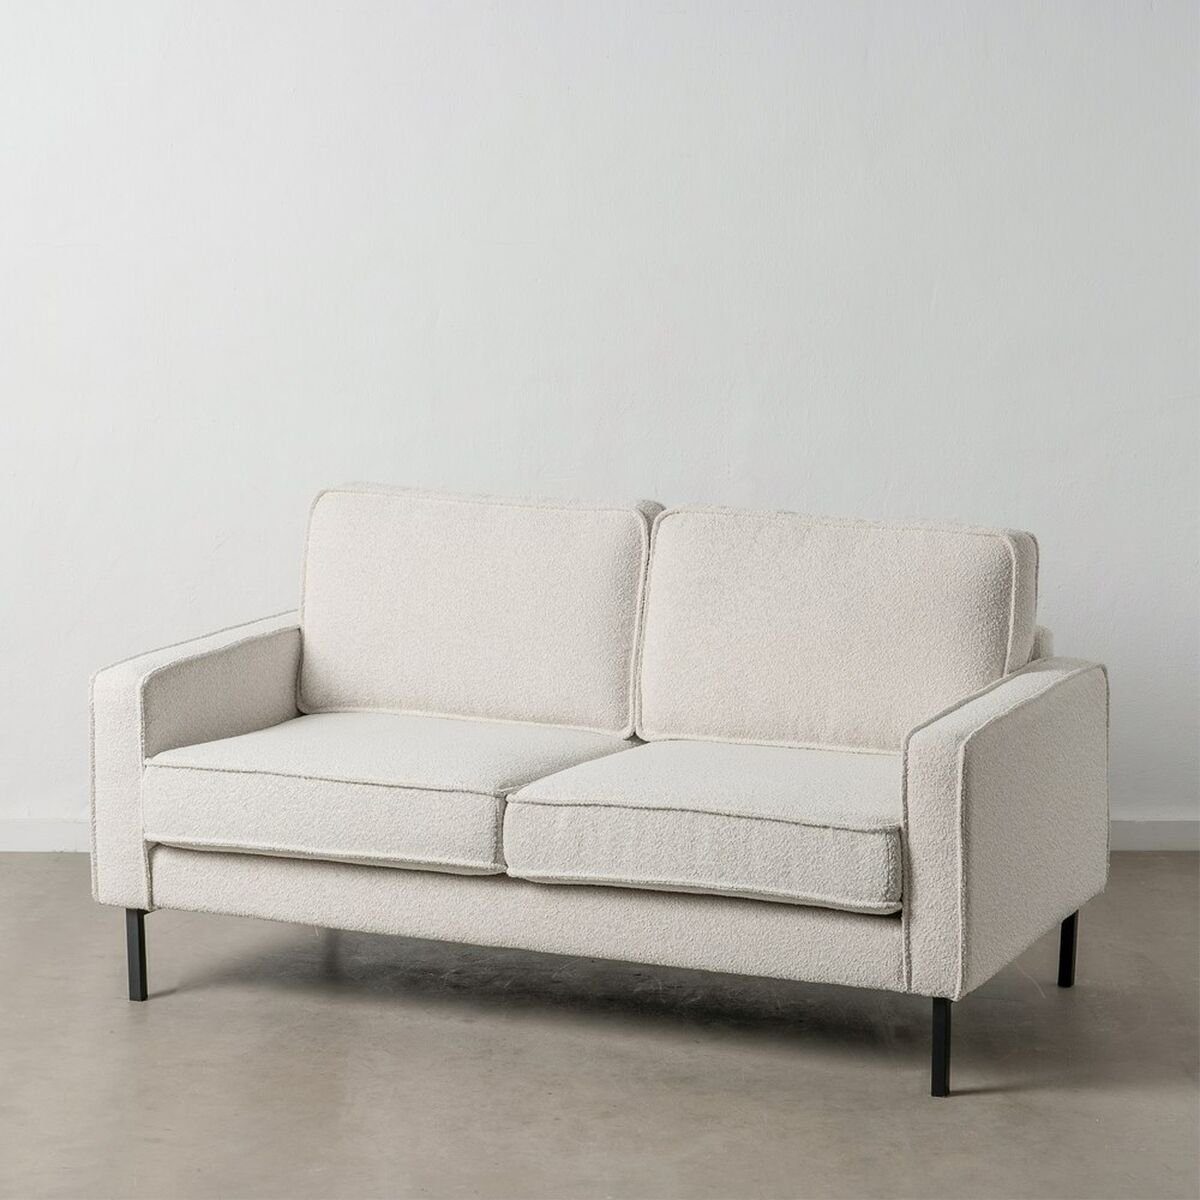 Bigbuy Sofa Sofa 163 x Stoffe 90 x Metall 87 cm Beige synthetische